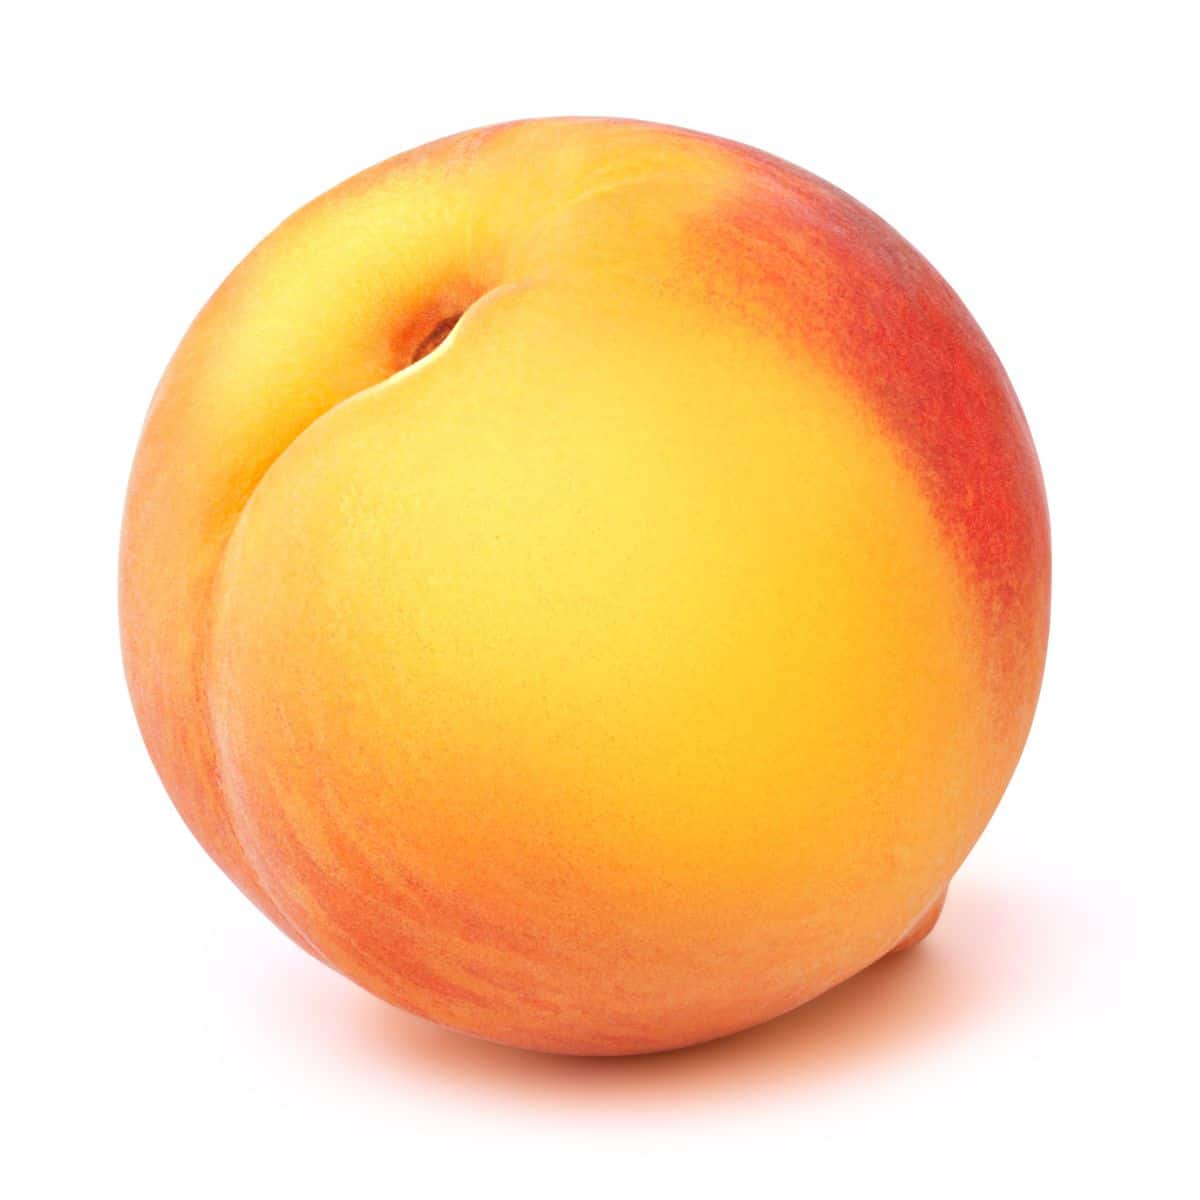 Elberta peach on a white background.